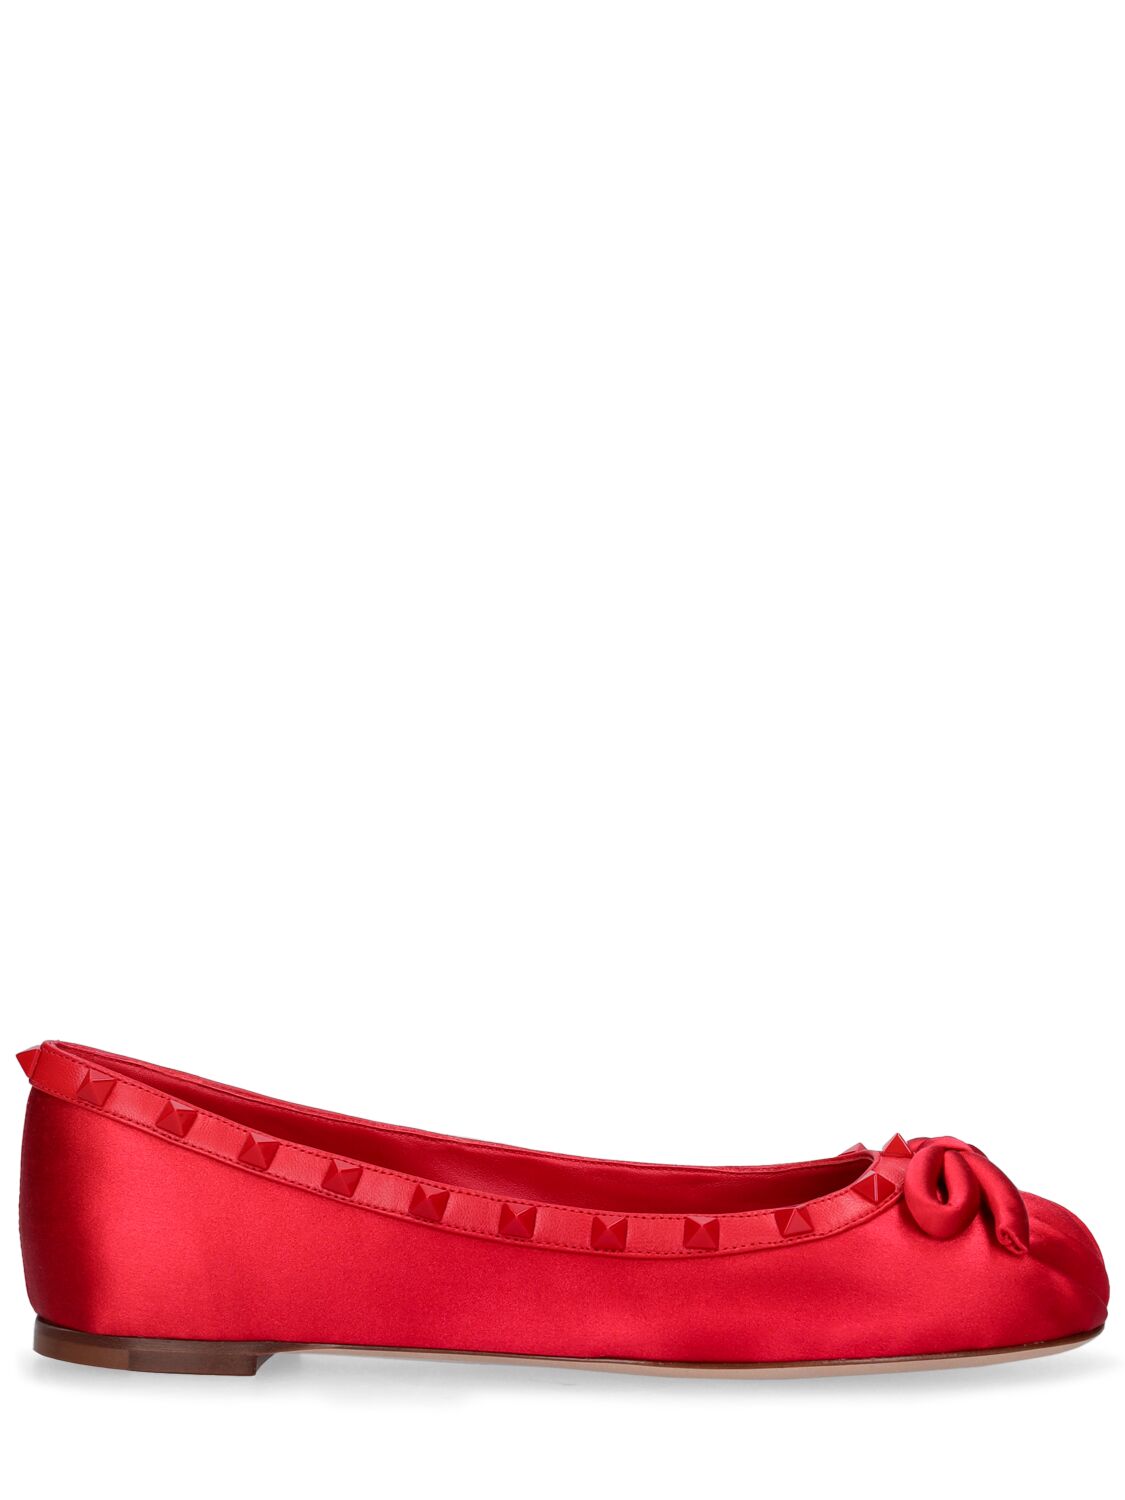 Valentino Garavani 5mm Rockstud Satin & Leather Flats In Red